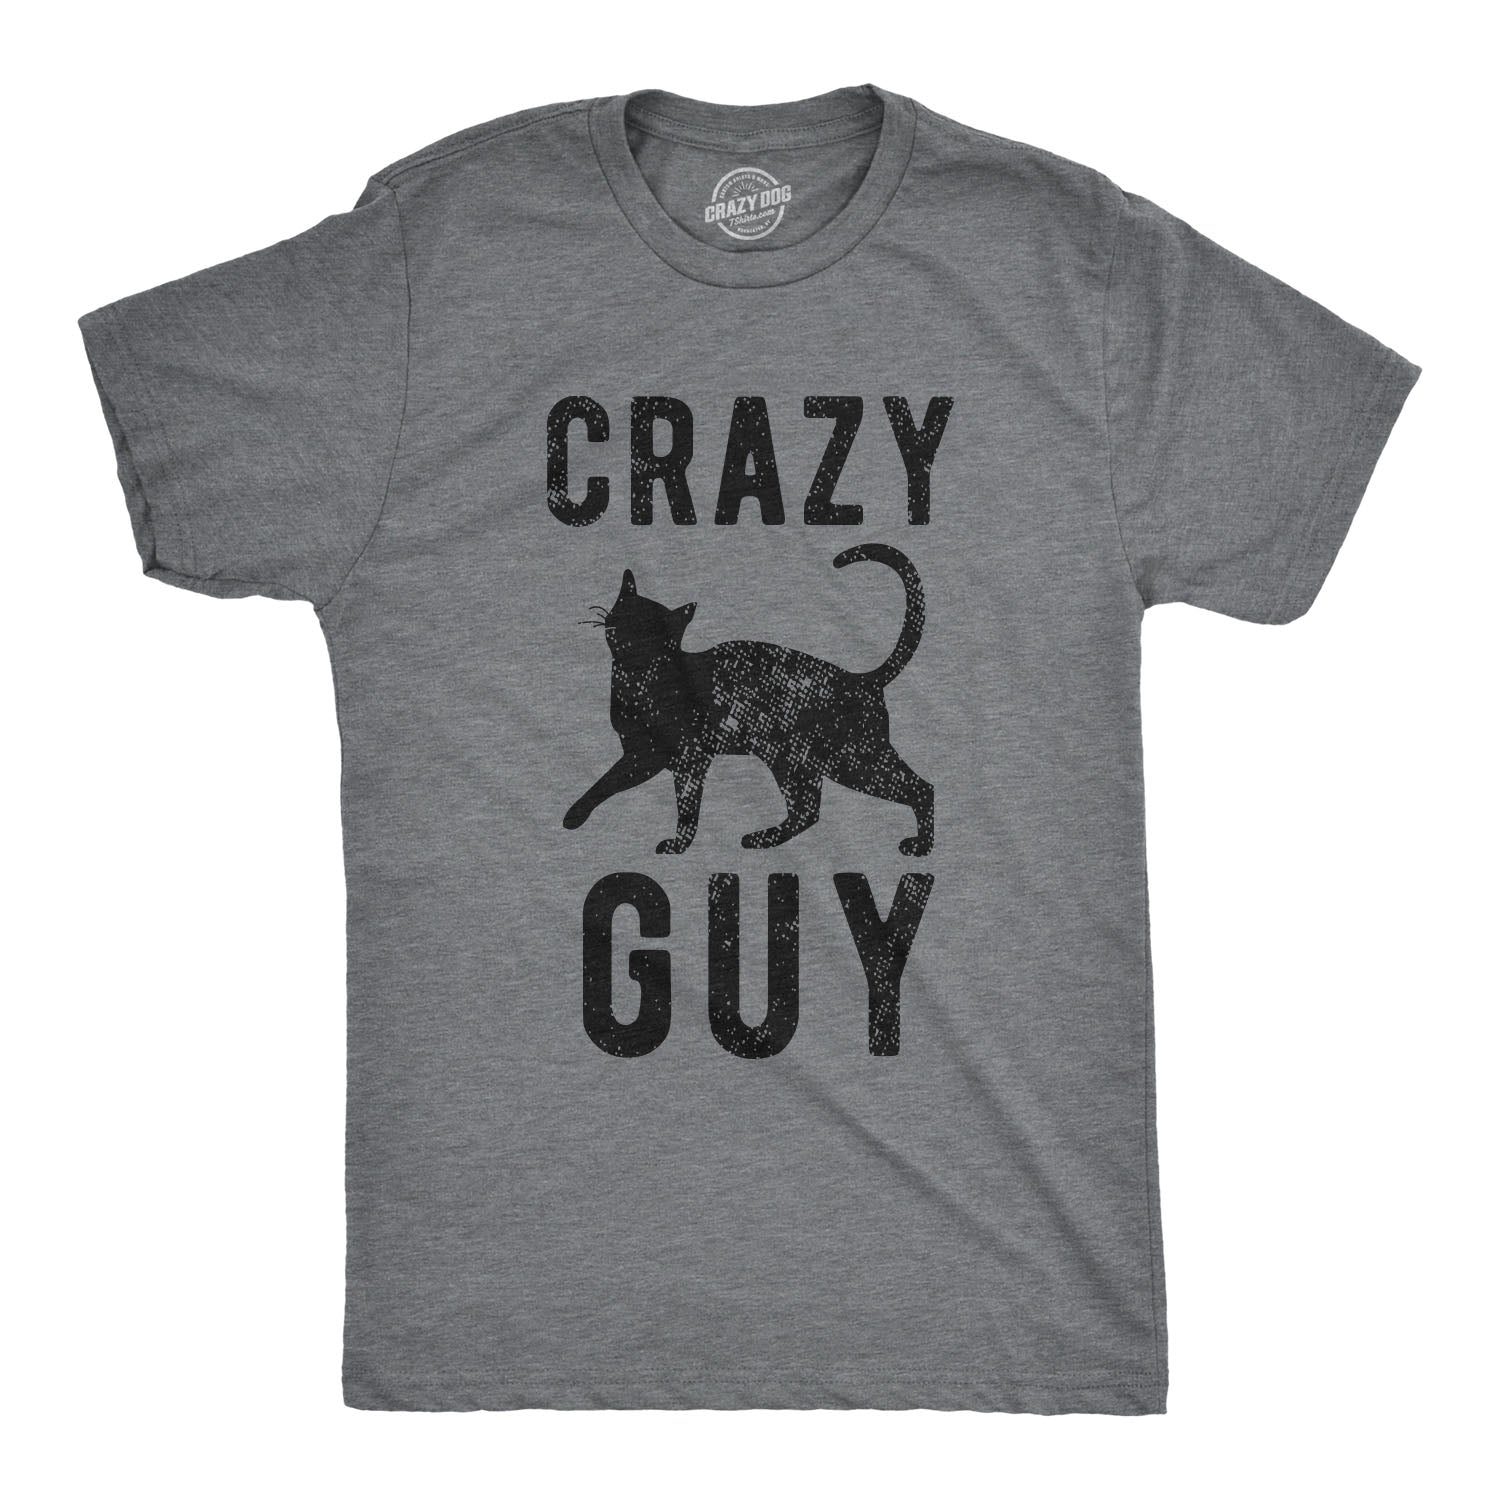 crazy cat guy shirt